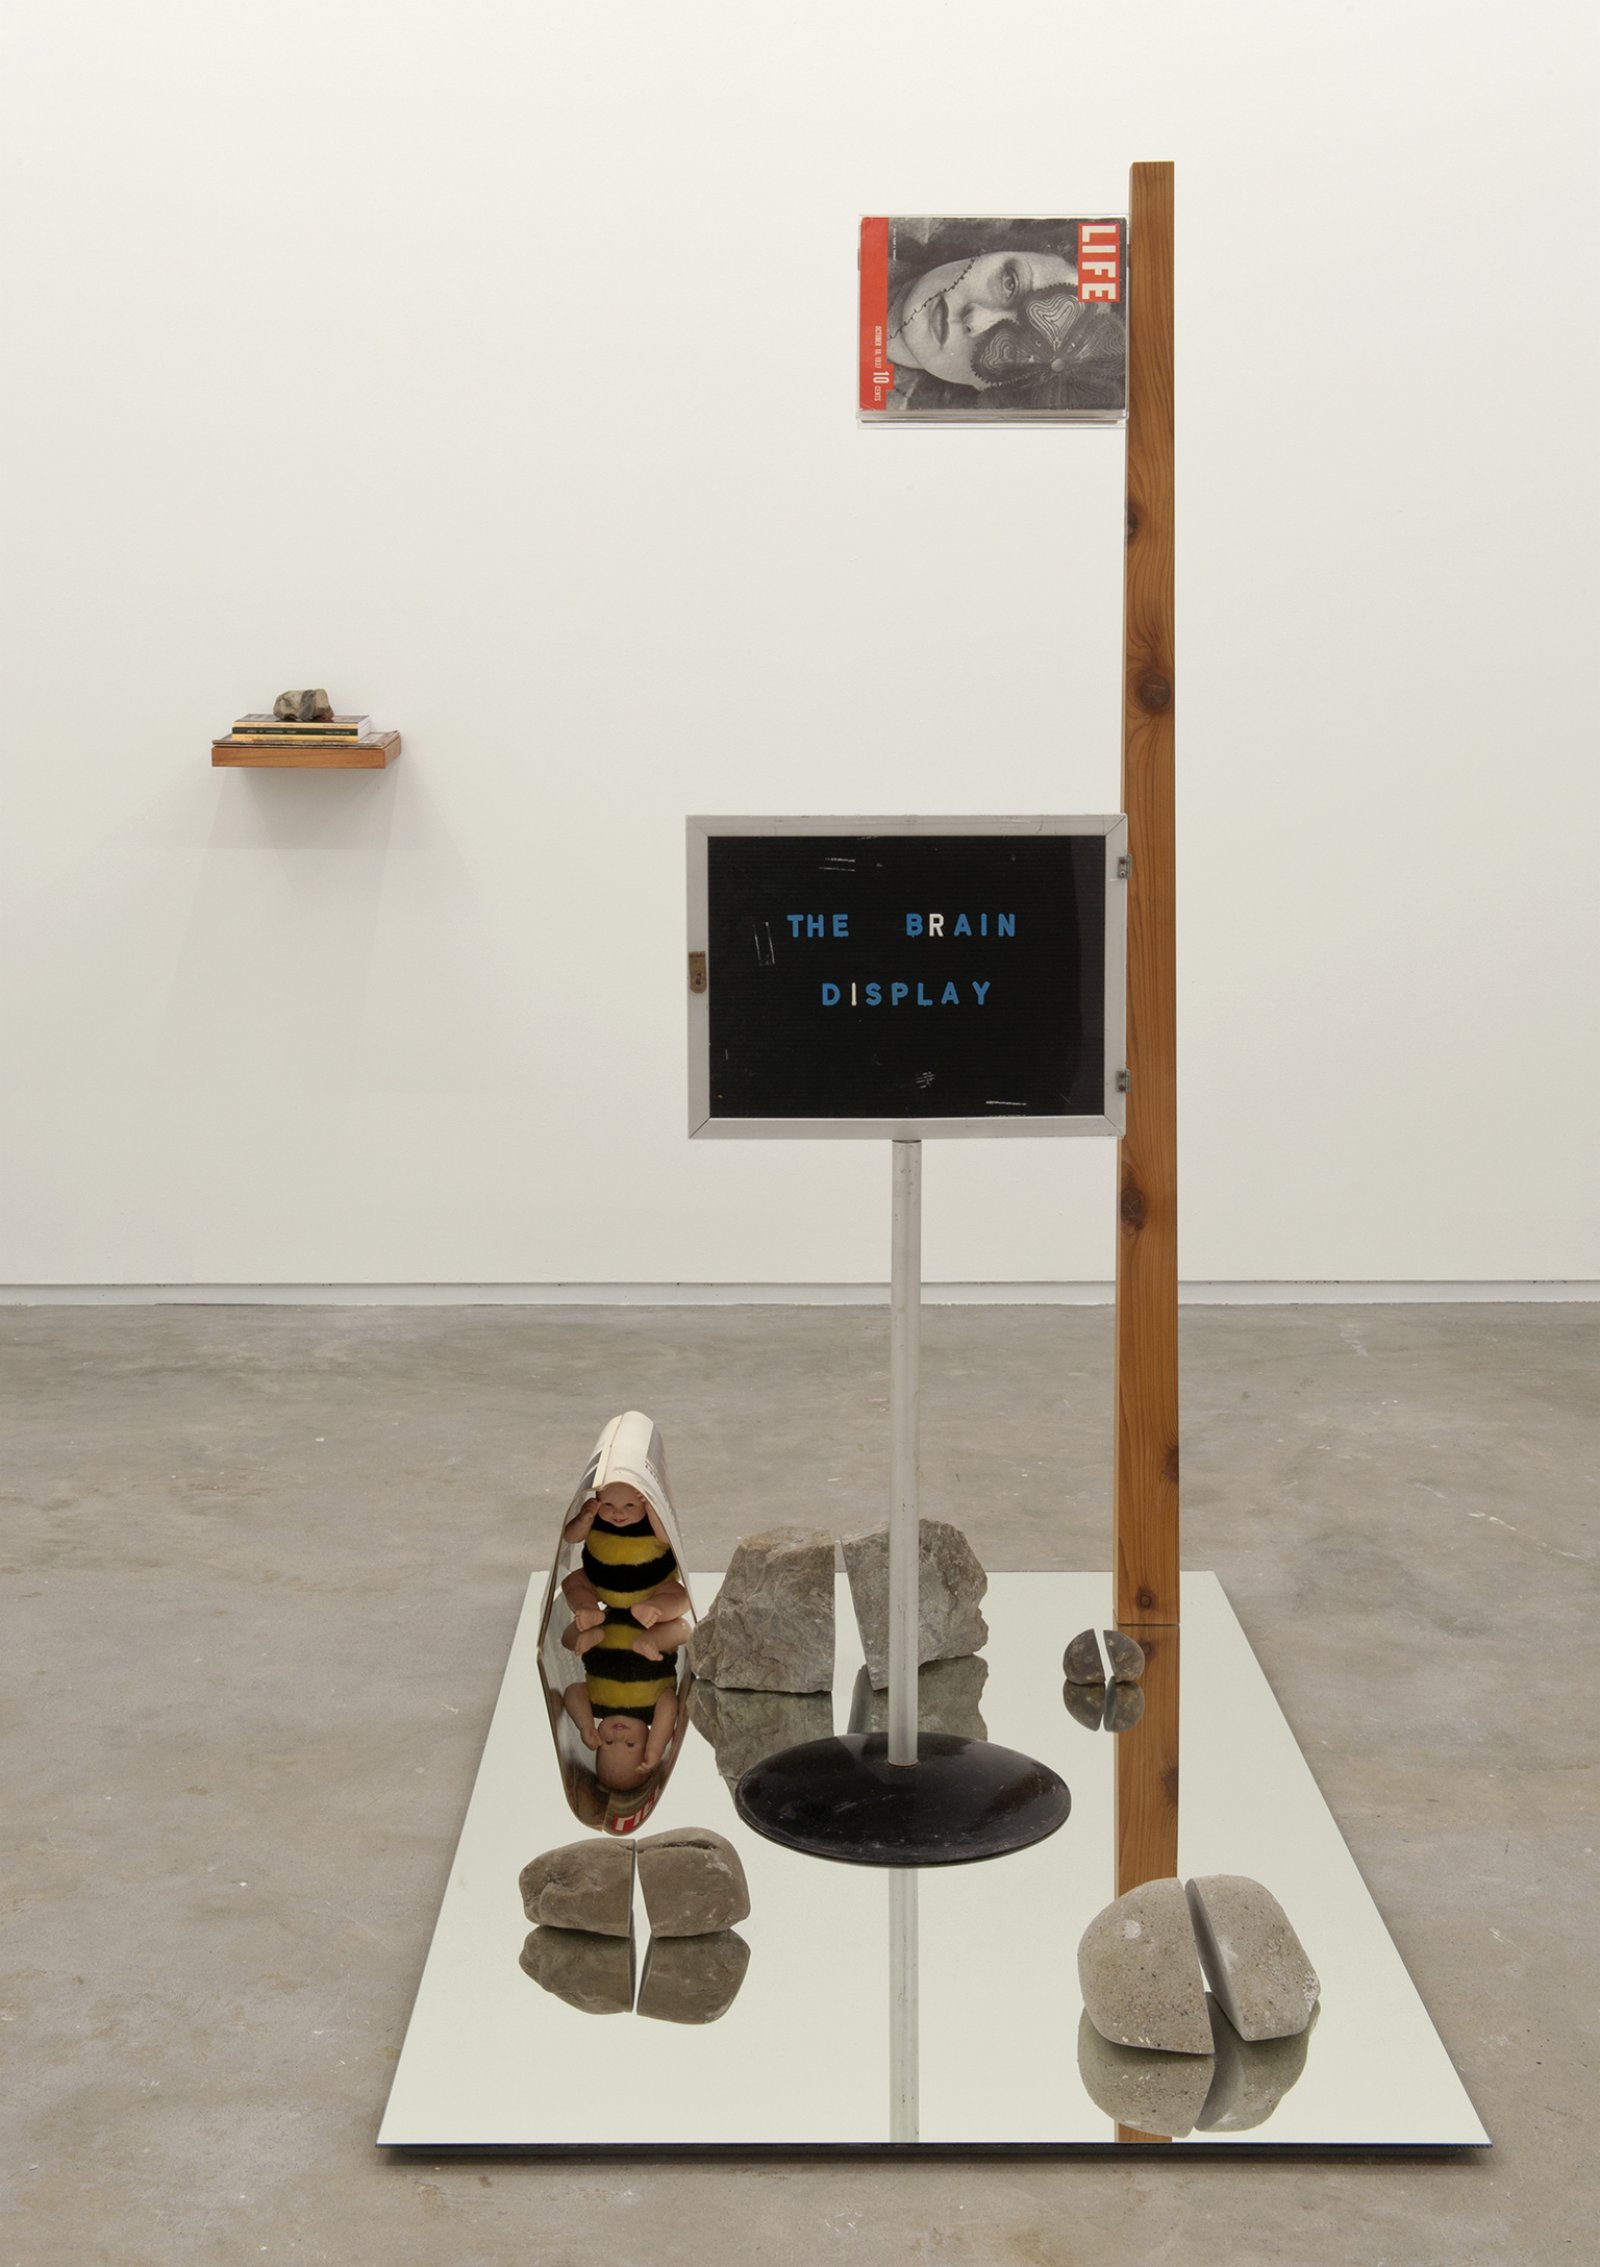 Judy Radul, The Brain Display, 2010, mirror, wood, 5 stones, plastic book holder, Life magazines, doll, 67 x 40 x 80 in. (170 x 102 x 203 cm) by Judy Radul